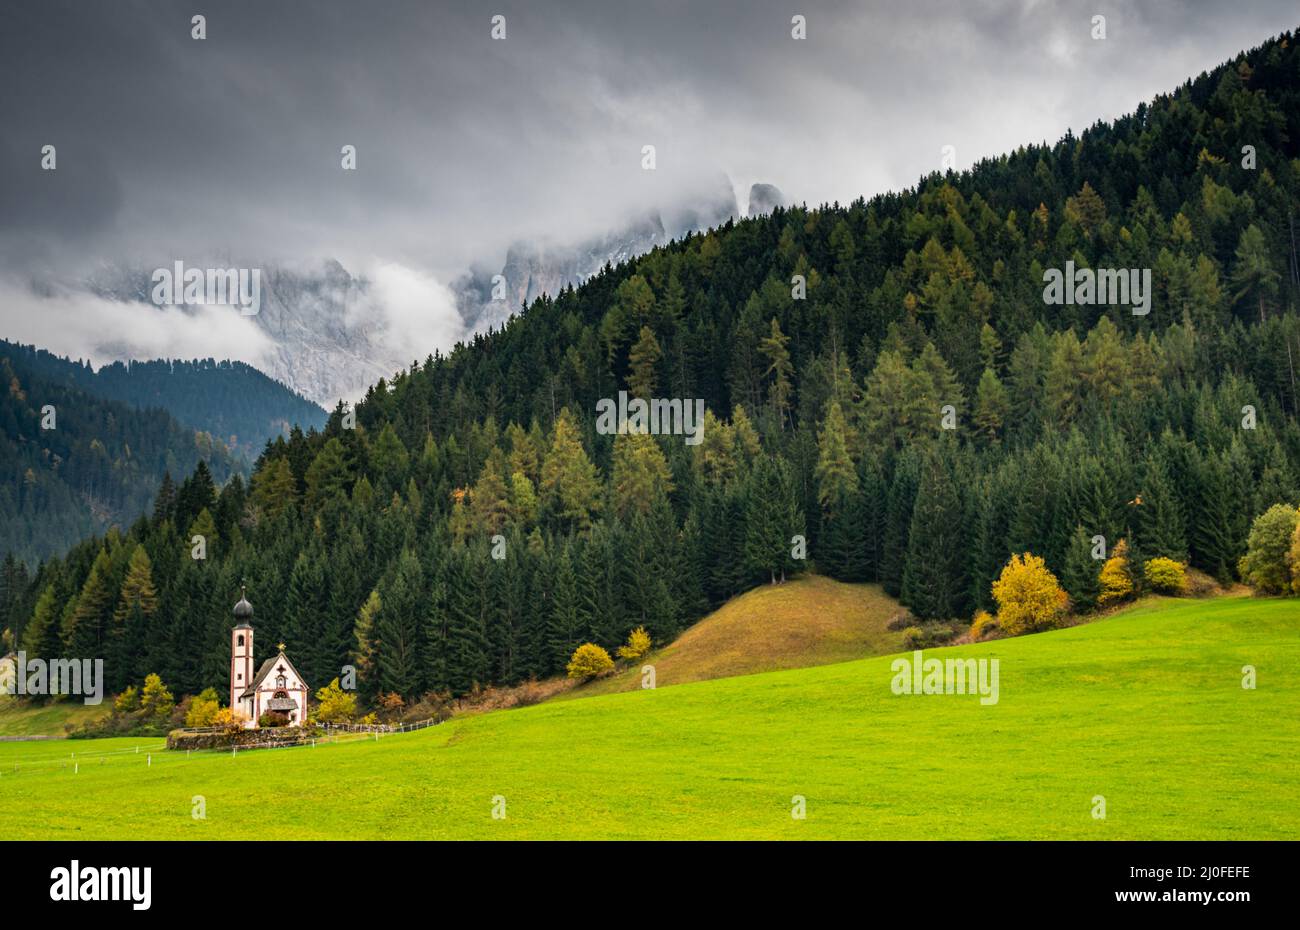 L'église de Saint John, Ranui, Chiesetta di san giovanni in Ranui Runes South Tyrol Italie, entourée de prairie verte, forêt Banque D'Images